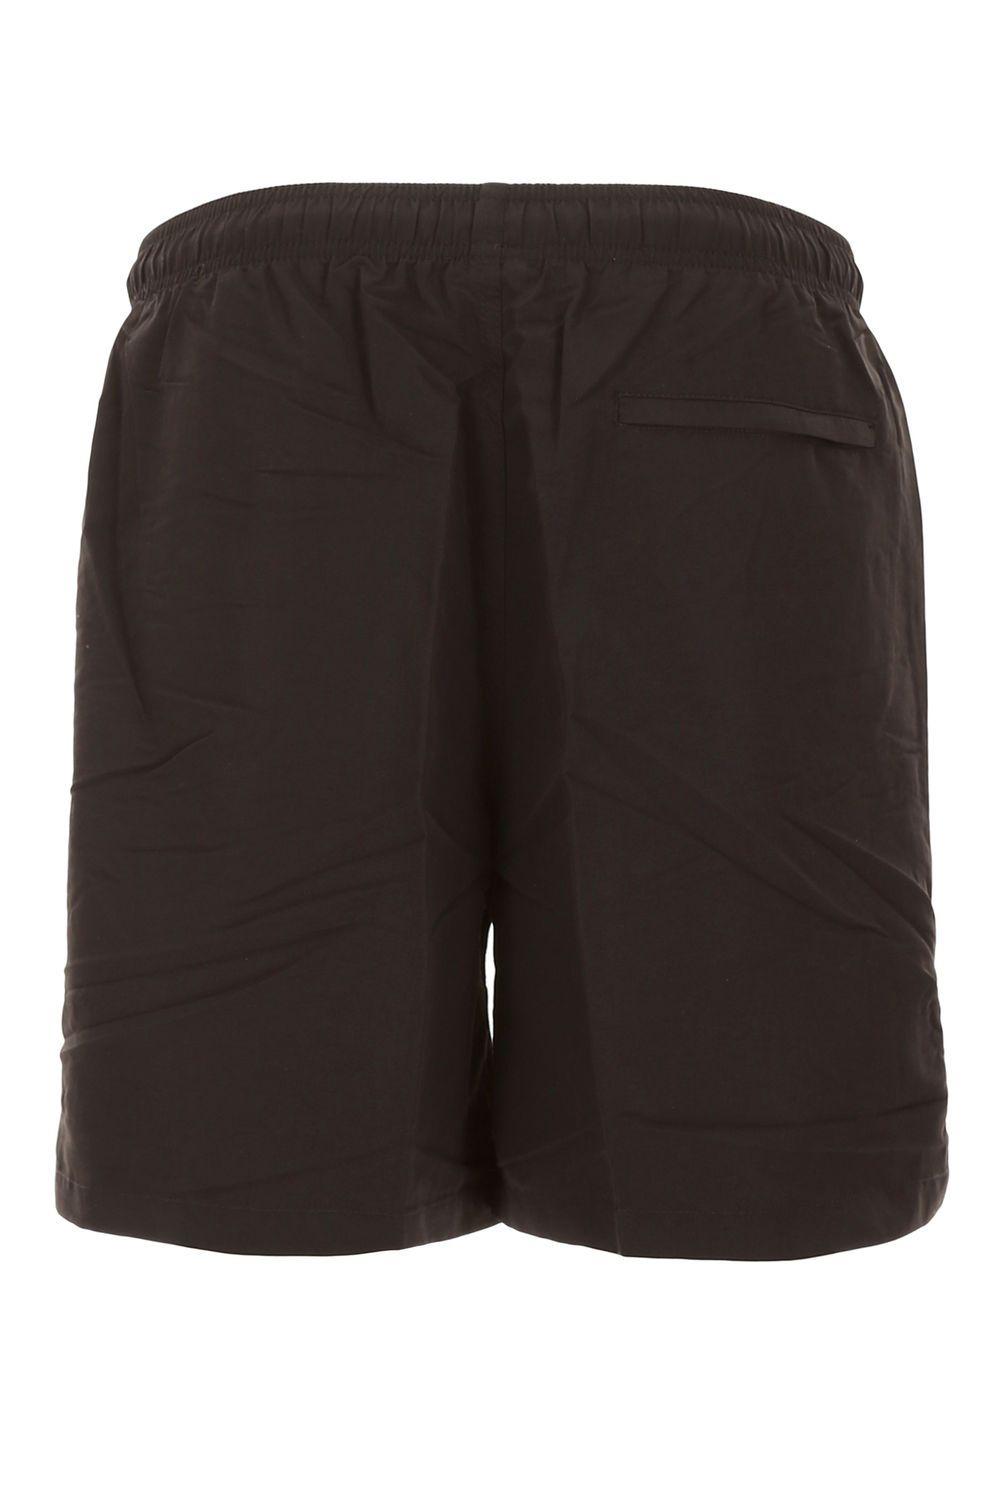 Stussy Synthetic Swim Shorts in Black for Men - Lyst